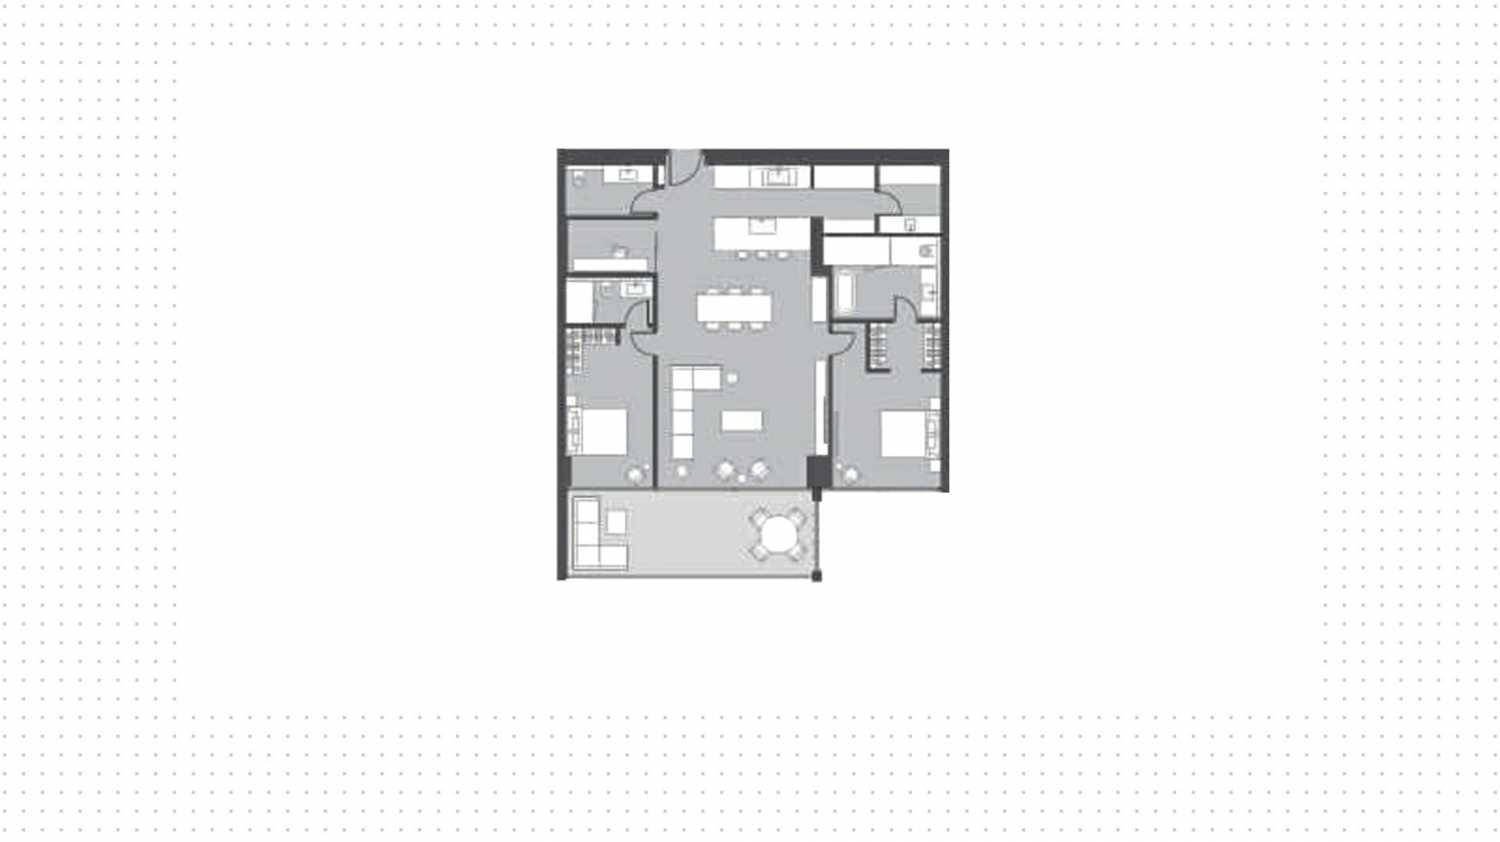 2-bedrooms apartment-0-1